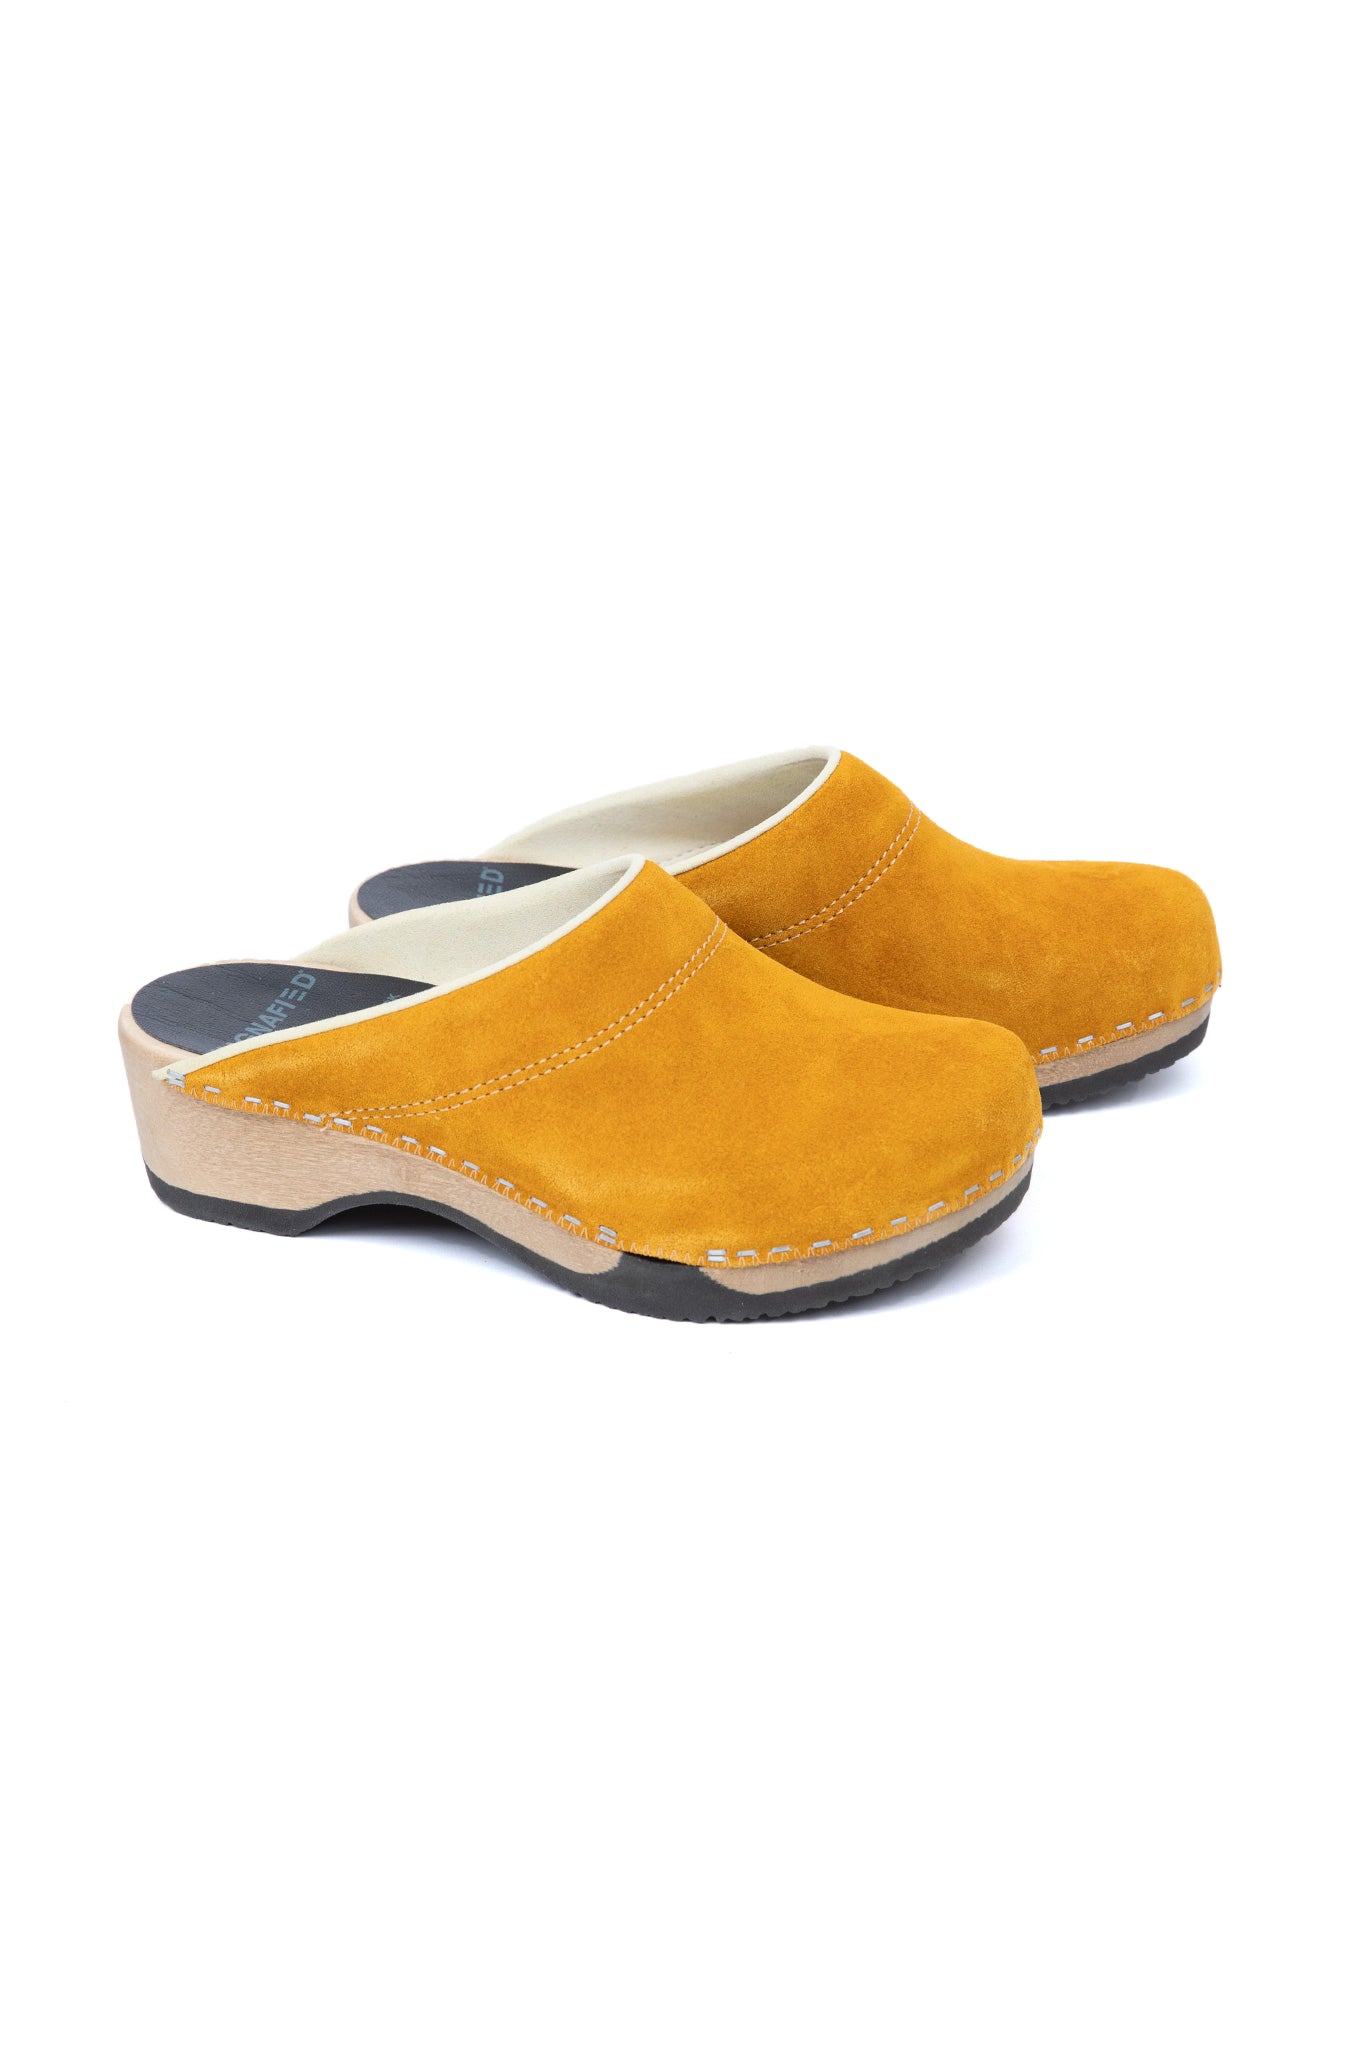 Embla Clogs Footwear MAGNAFIED   